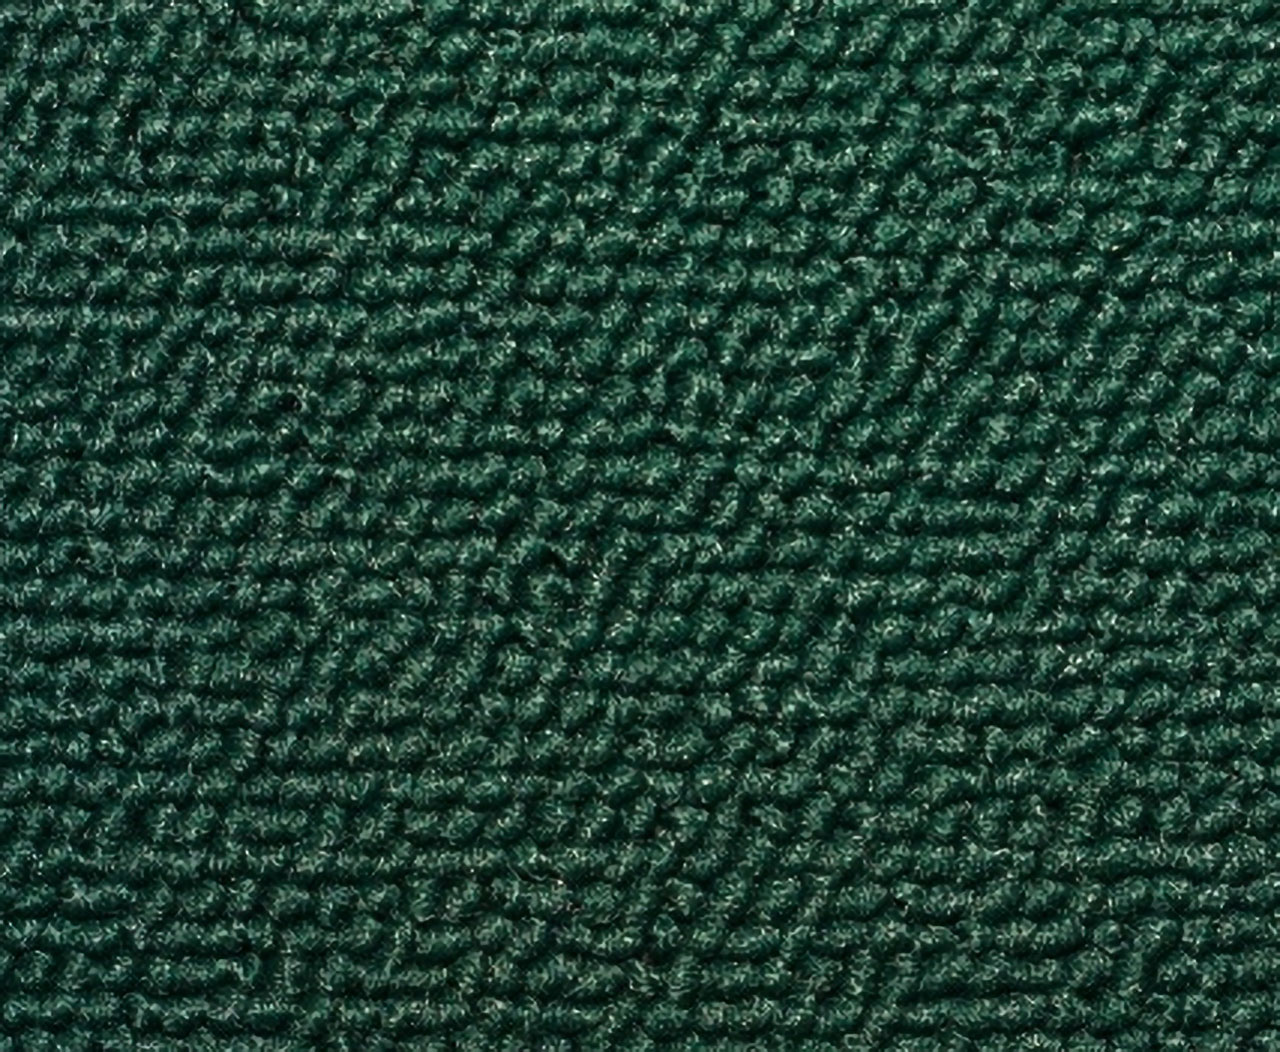 Holden Standard EH Standard Ute C58 Triton Green Carpet (Image 1 of 1)